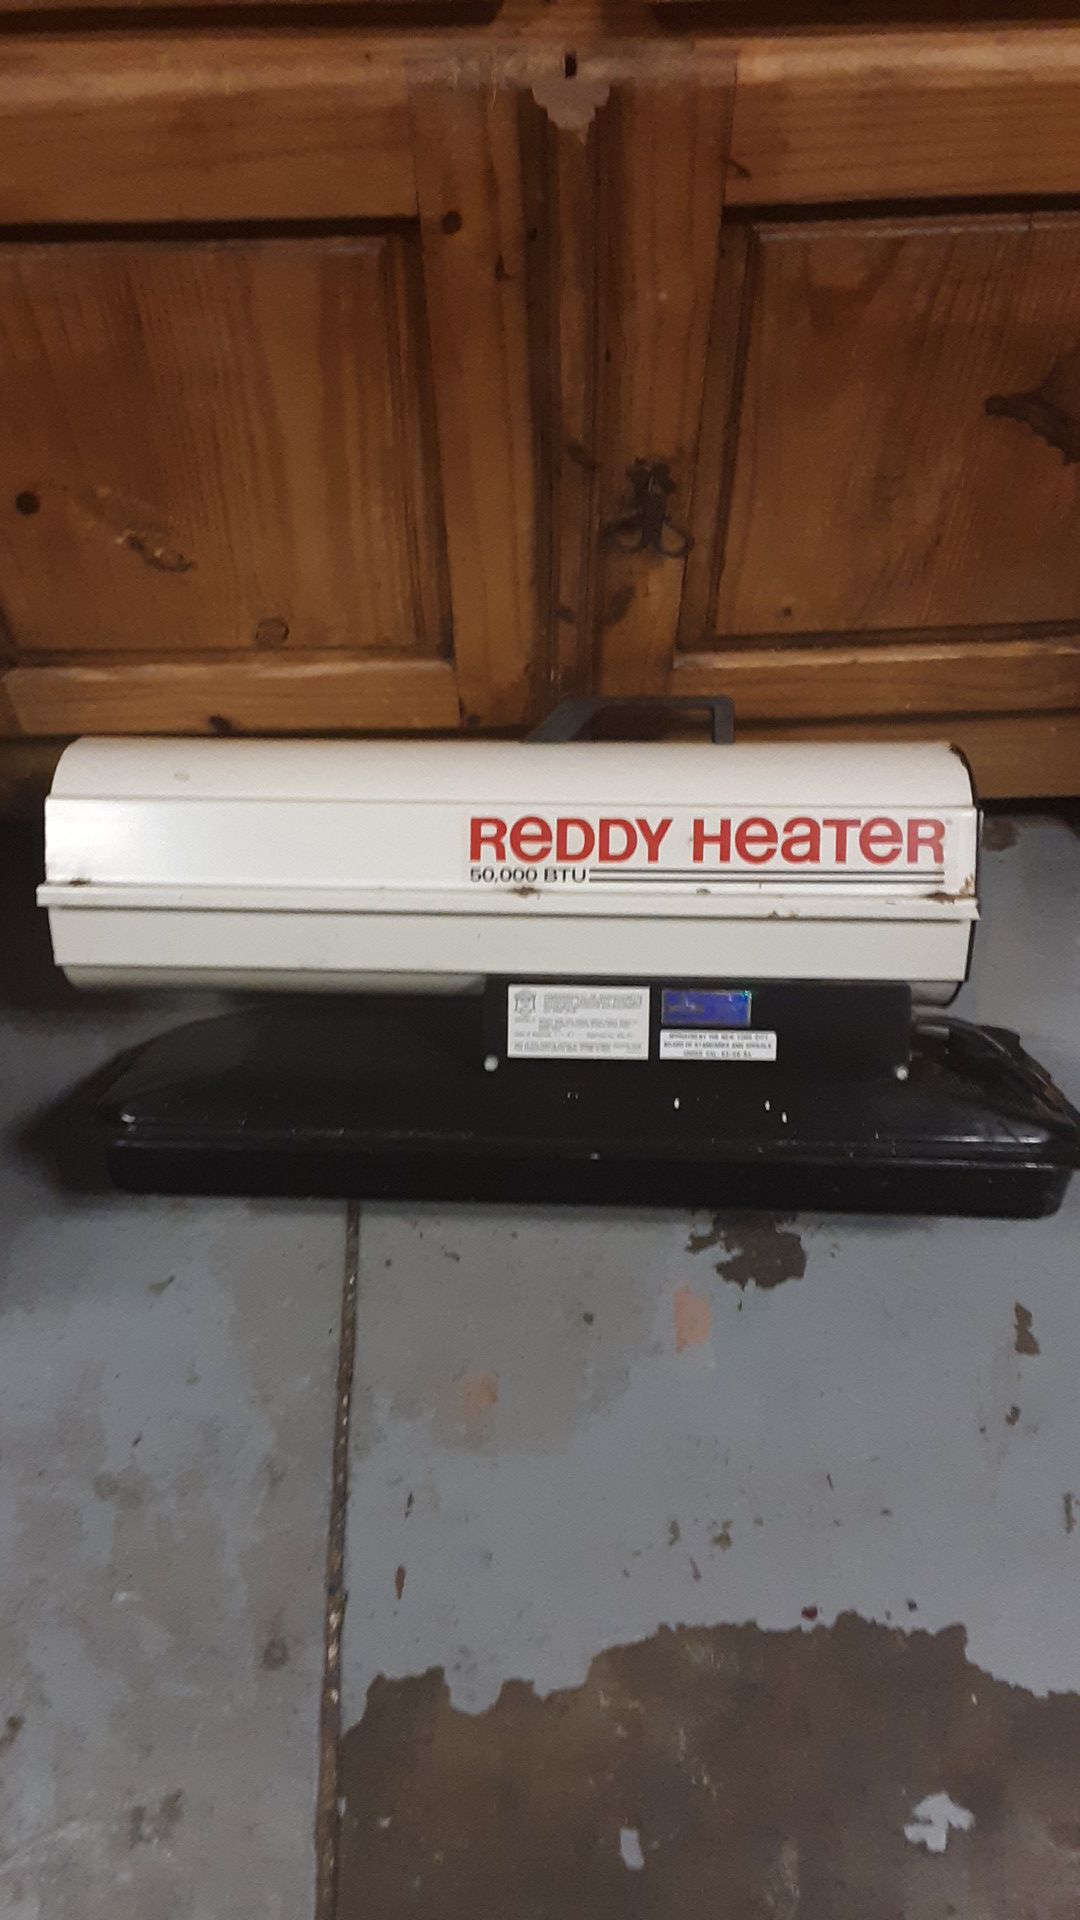 Reddy Heater good condition.